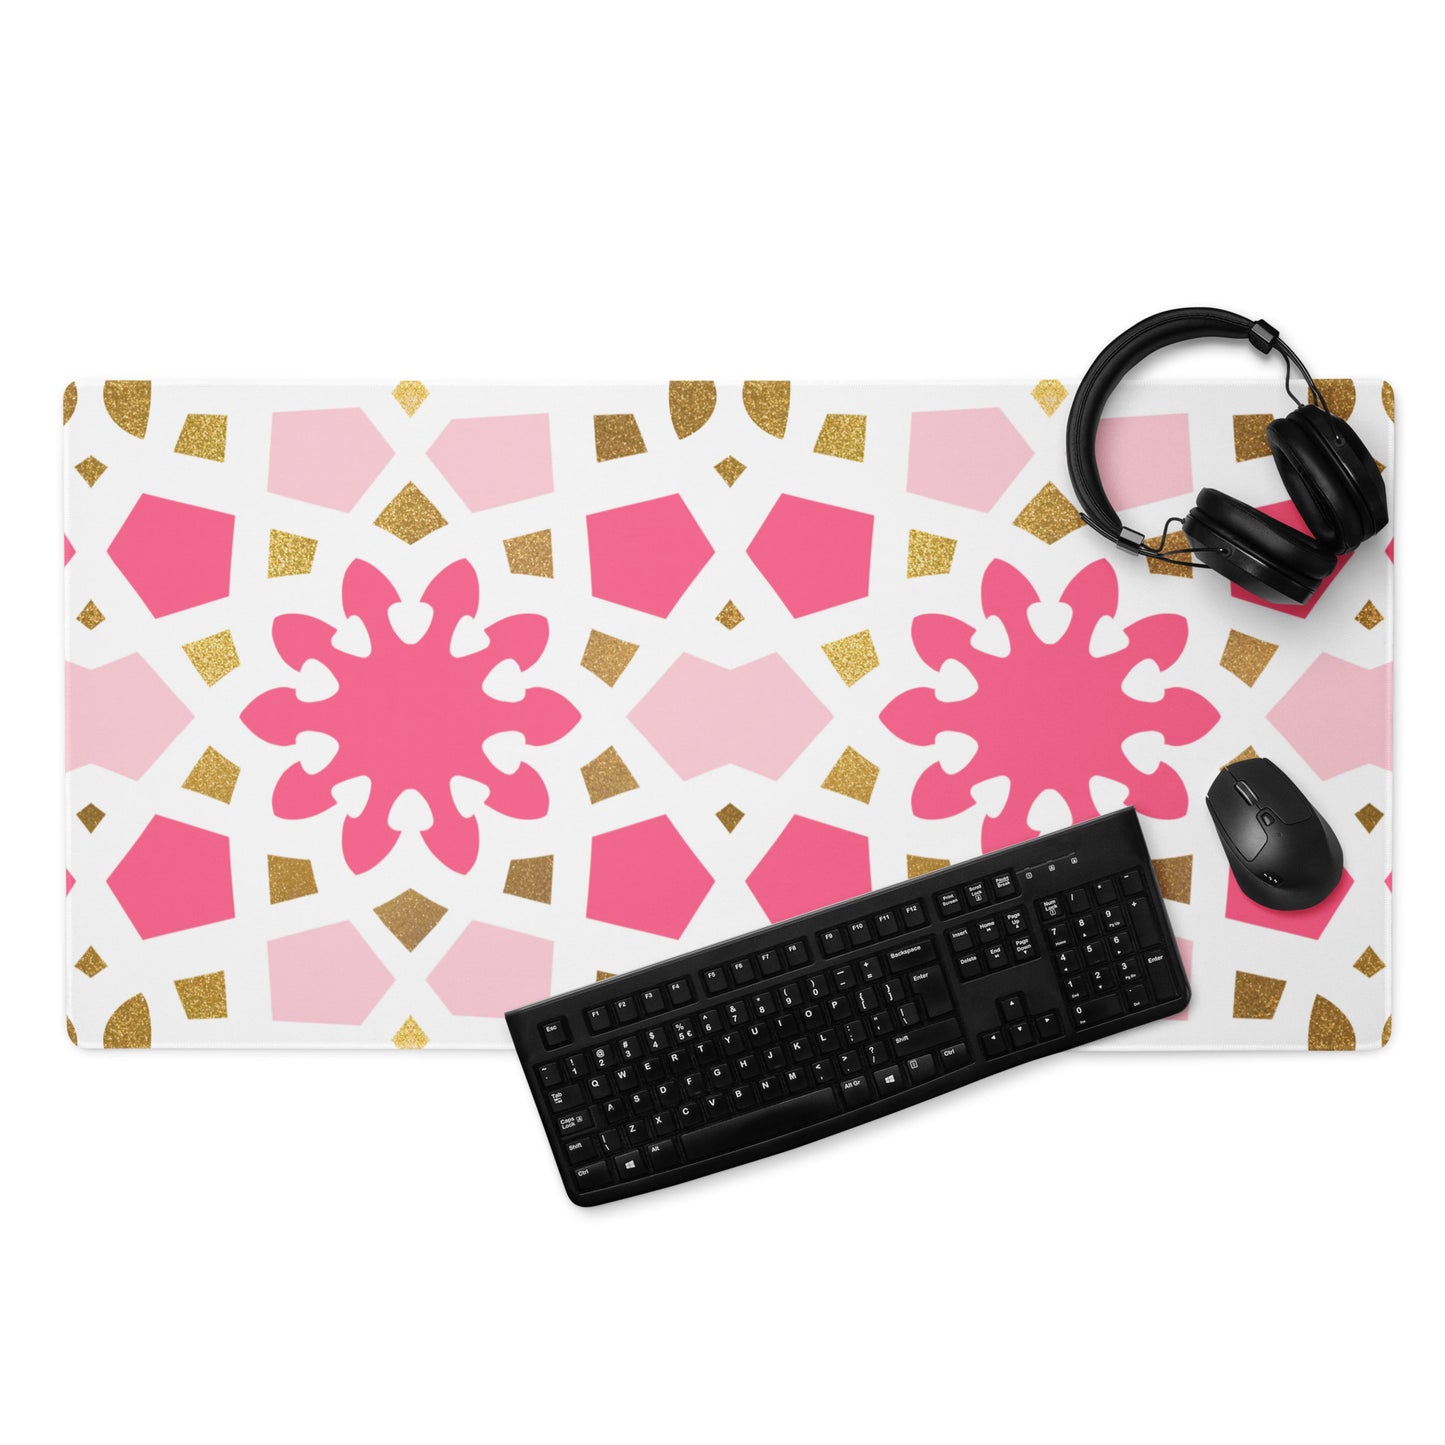 Desk Pad - Geometric Arabesque in Pinks